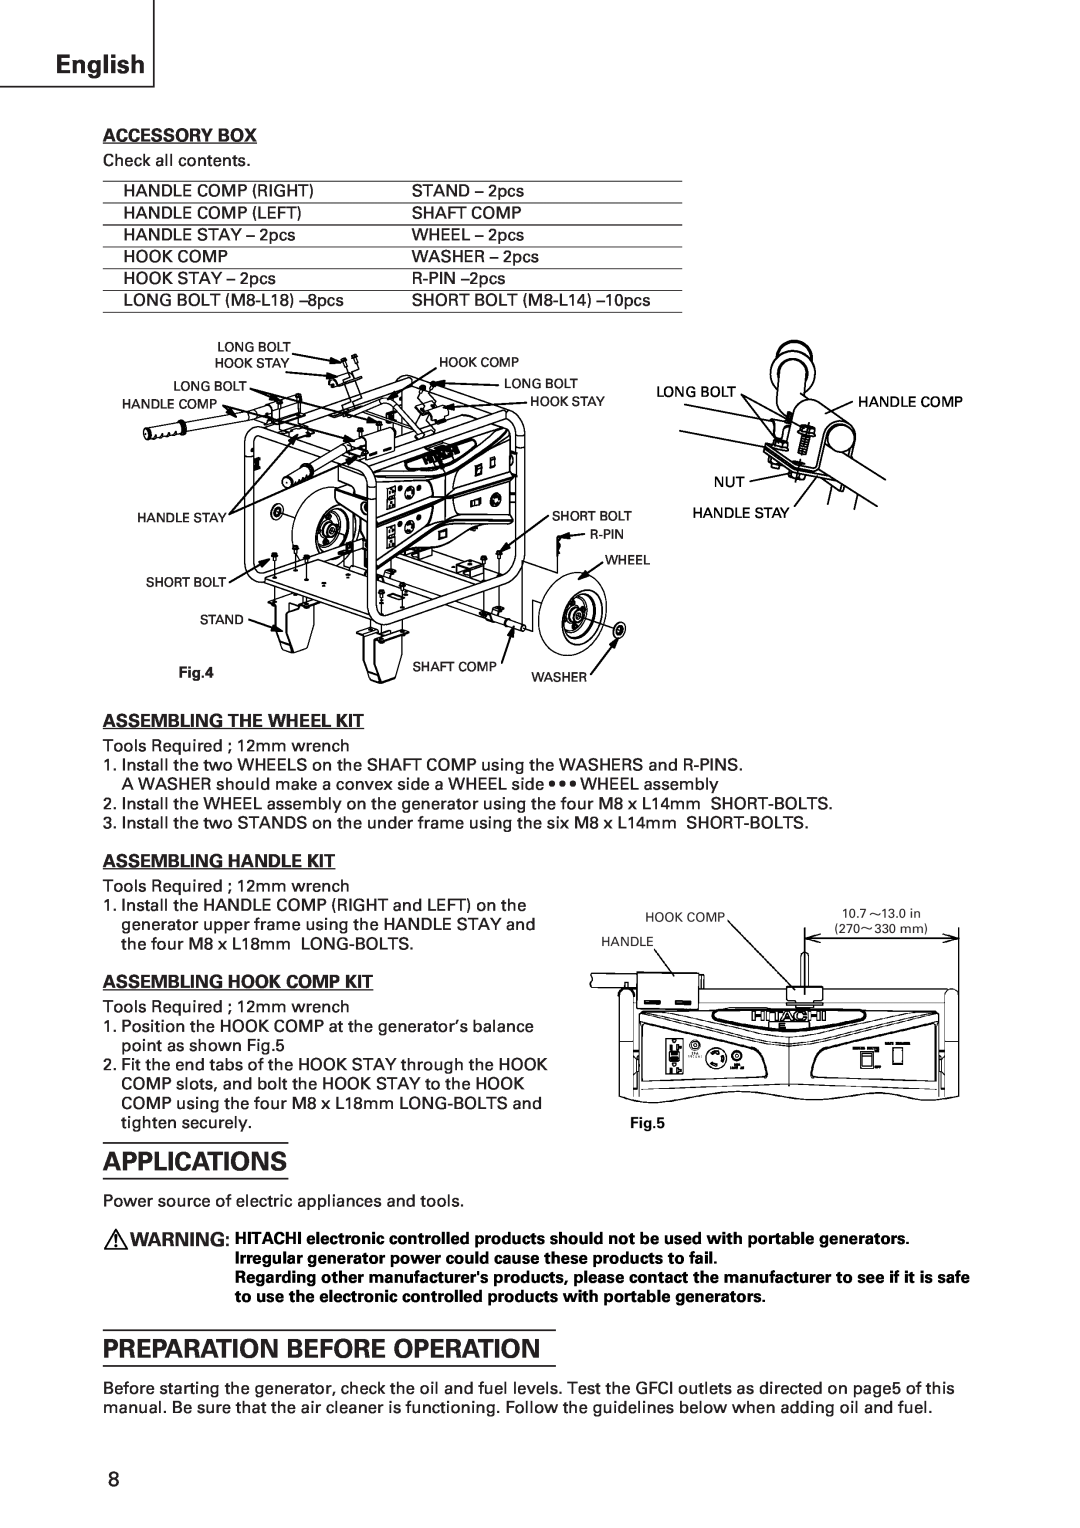 Hitachi E43 instruction manual Applications, Preparation Before Operation, English, Accessory Box, Assembling The Wheel Kit 